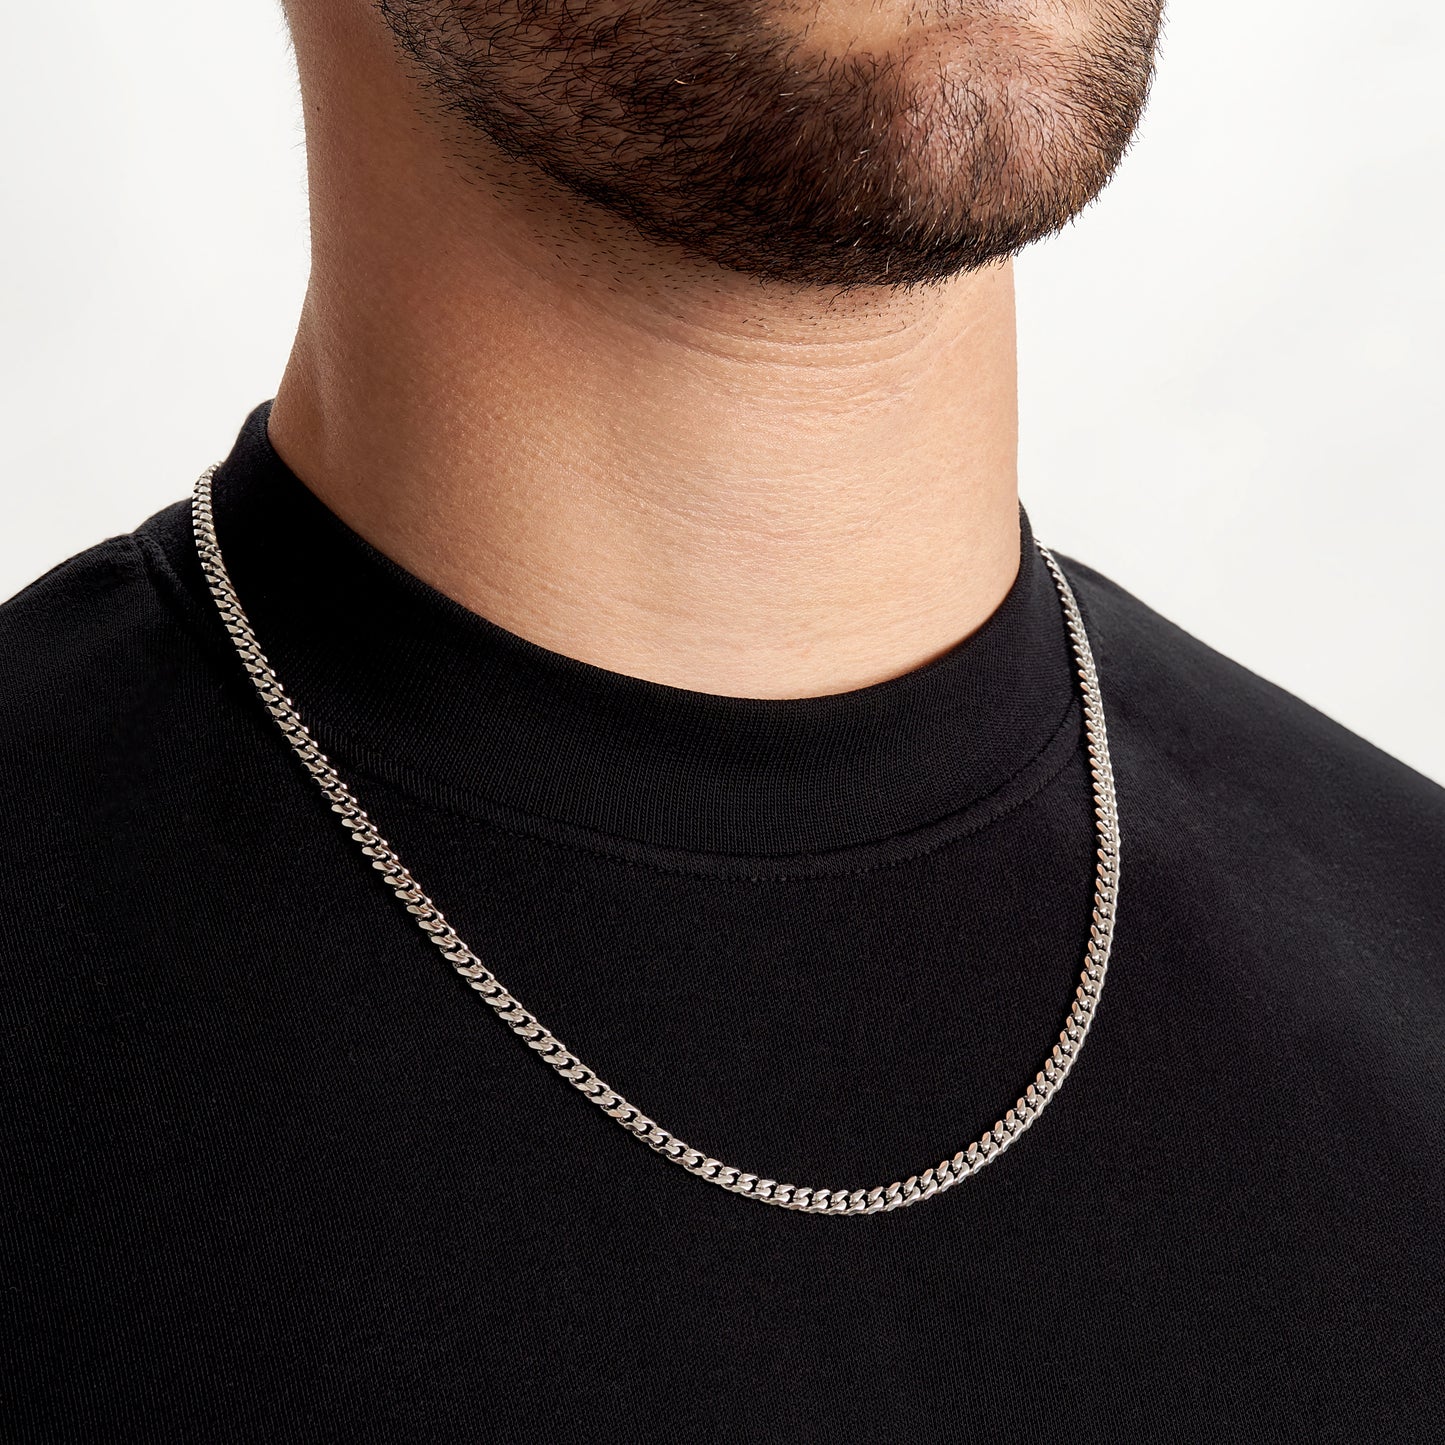 plain silver chain for male